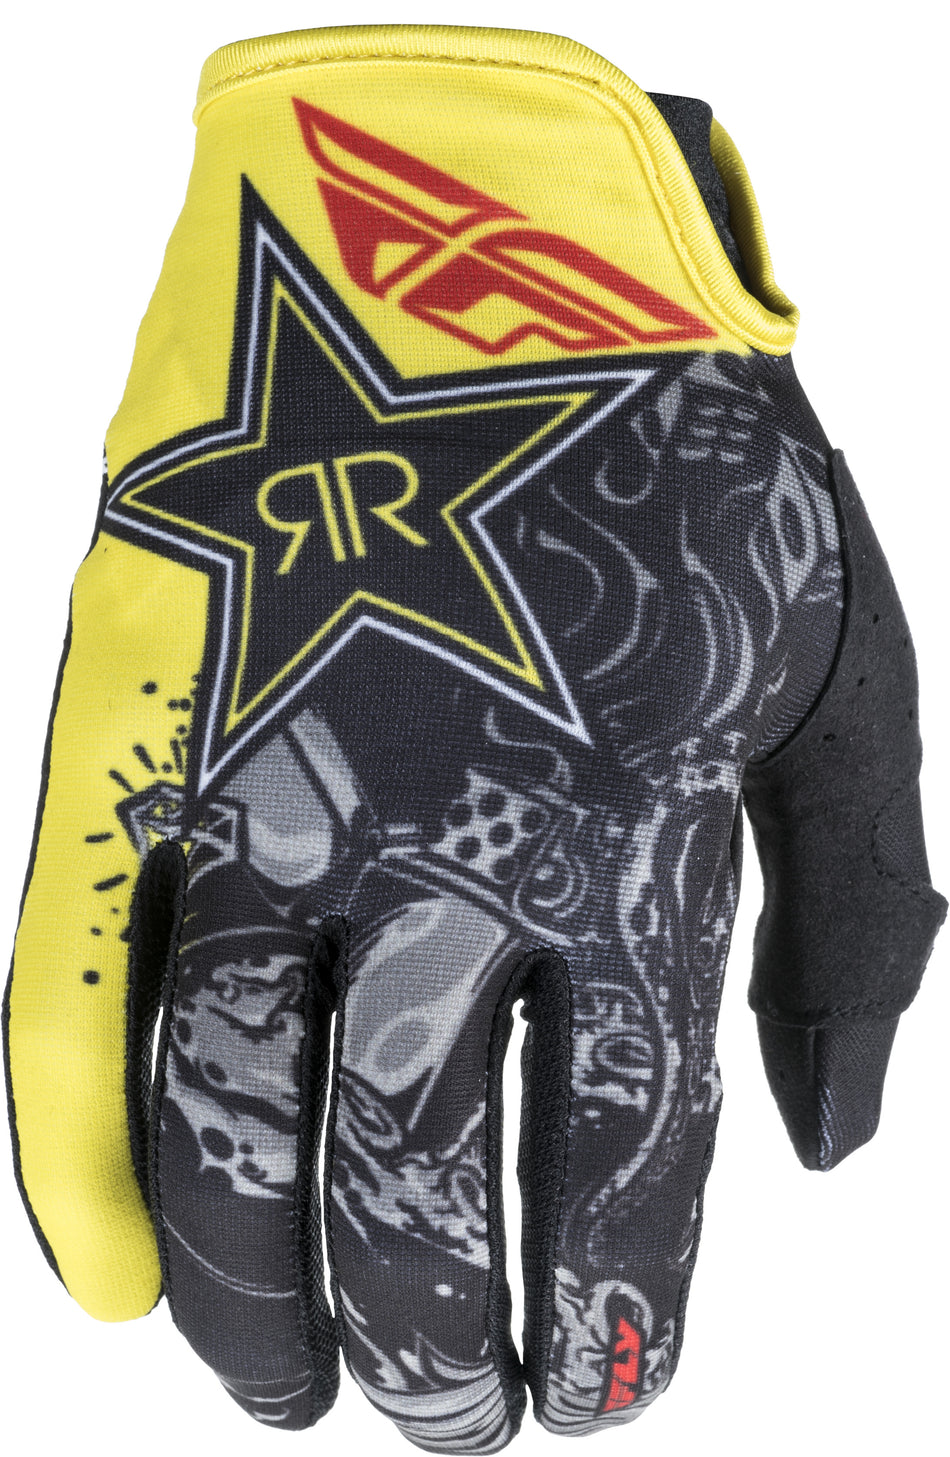 FLY RACING Lite Rockstar Gloves Black/Yellow Sz 8 371-01908